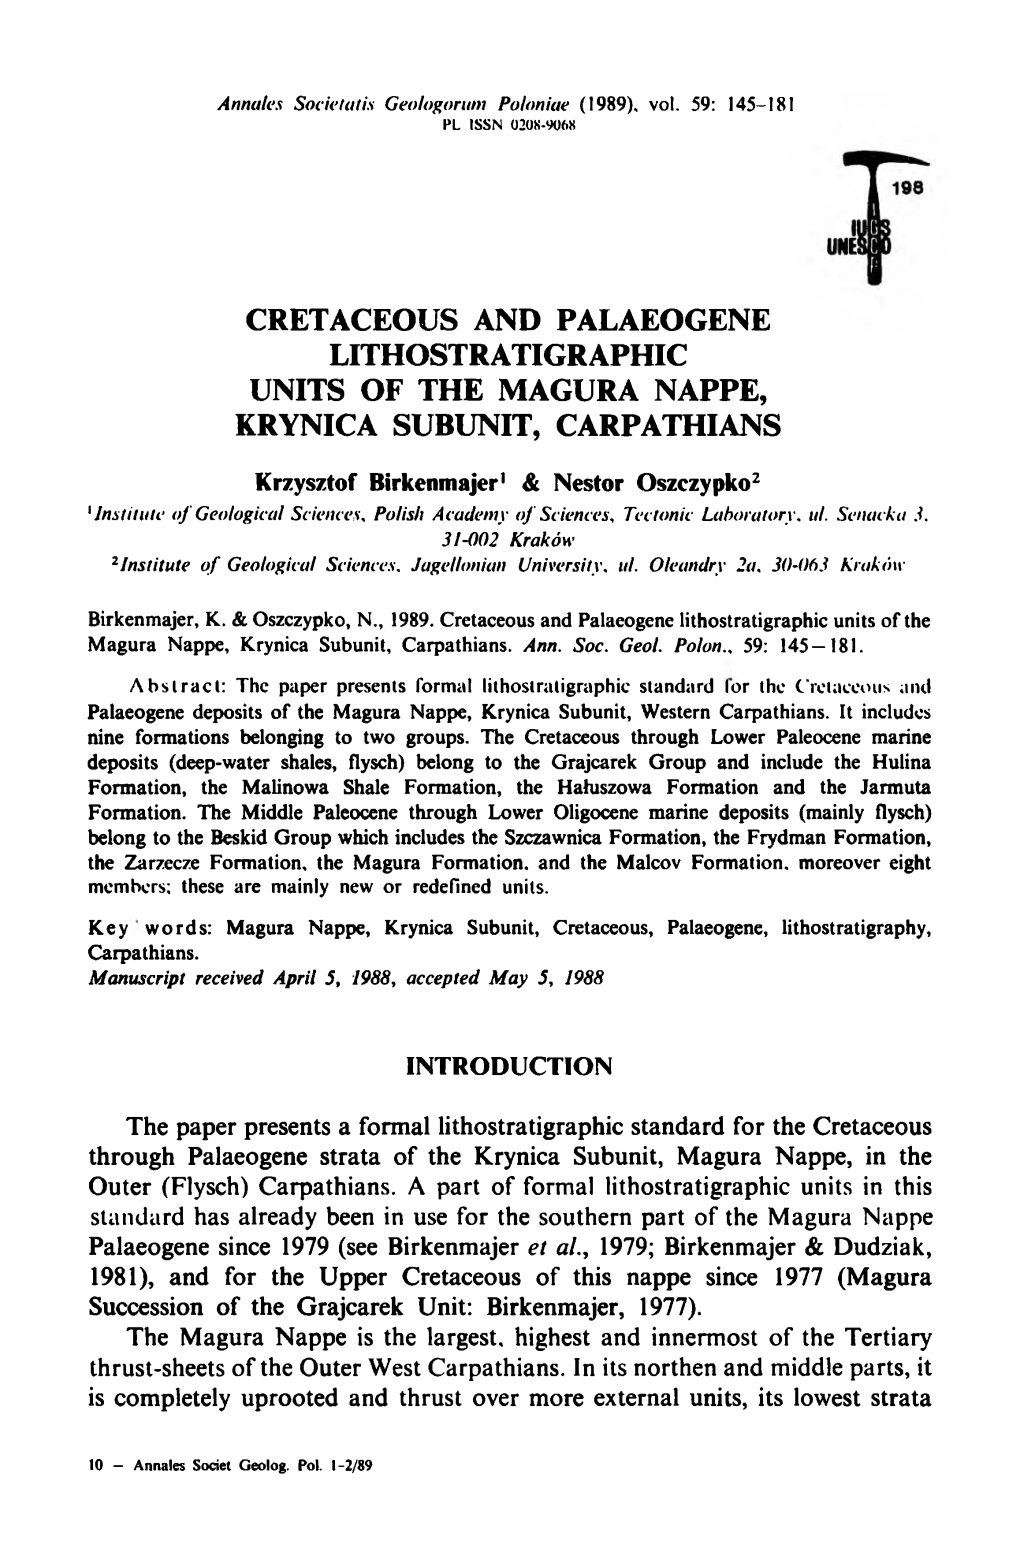 Cretaceous and Palaeogene Lithostratigraphic Units of the Magura Nappe, Krynica Subunit, Carpathians